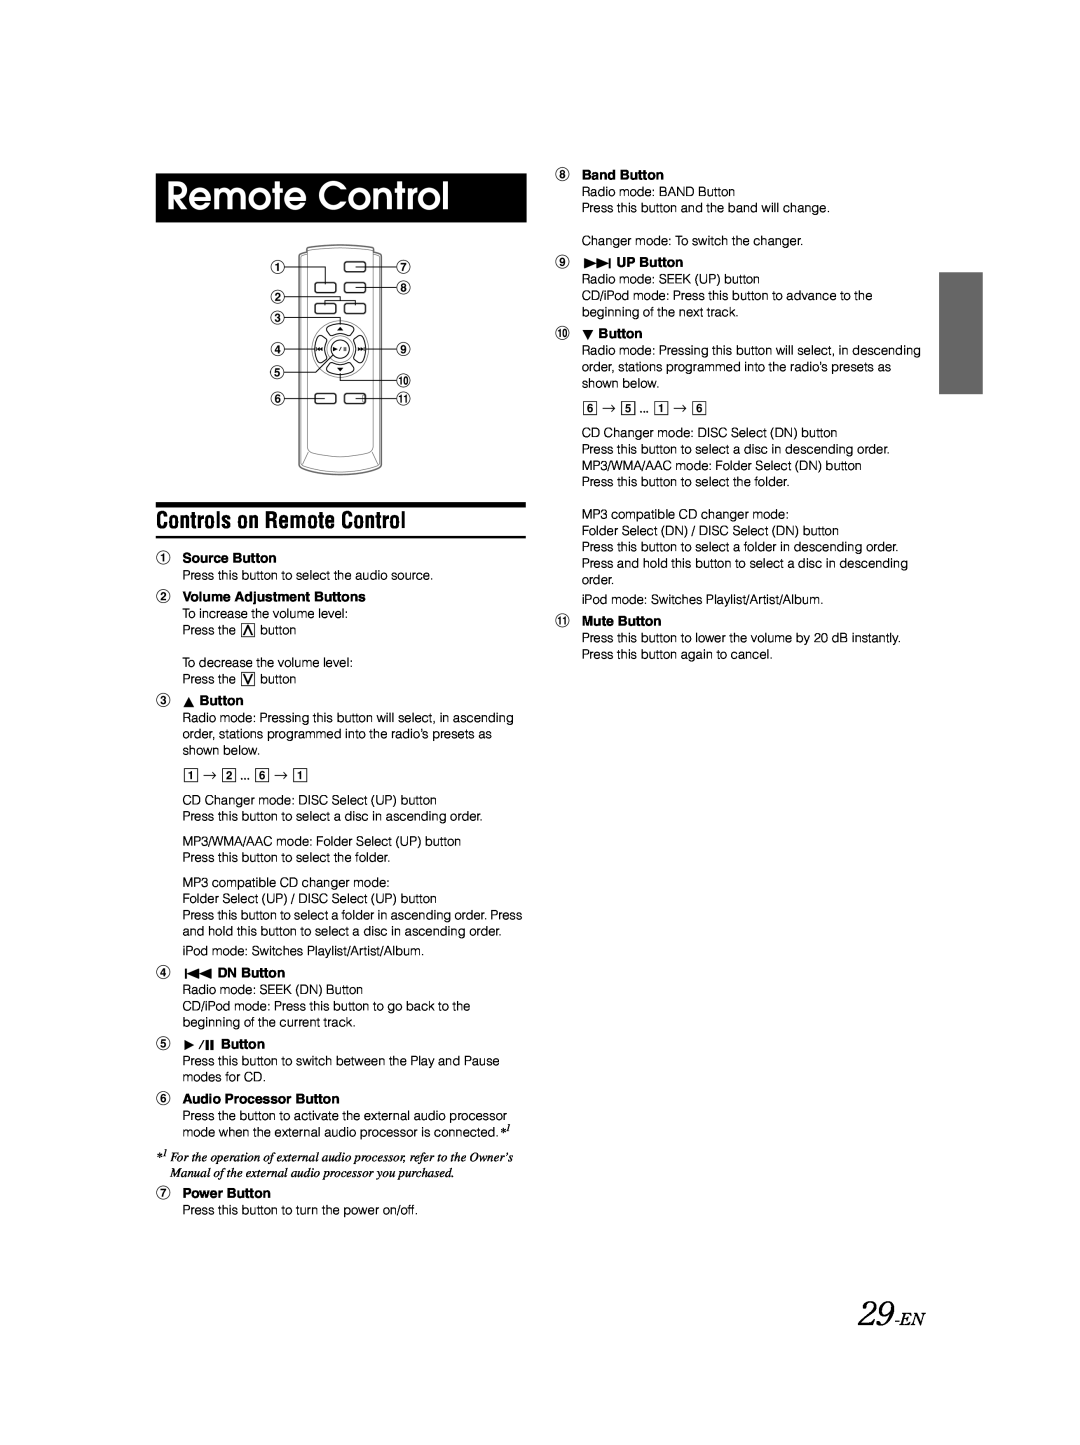 Alpine CDA-9885 owner manual Controls on Remote Control, 29-EN 